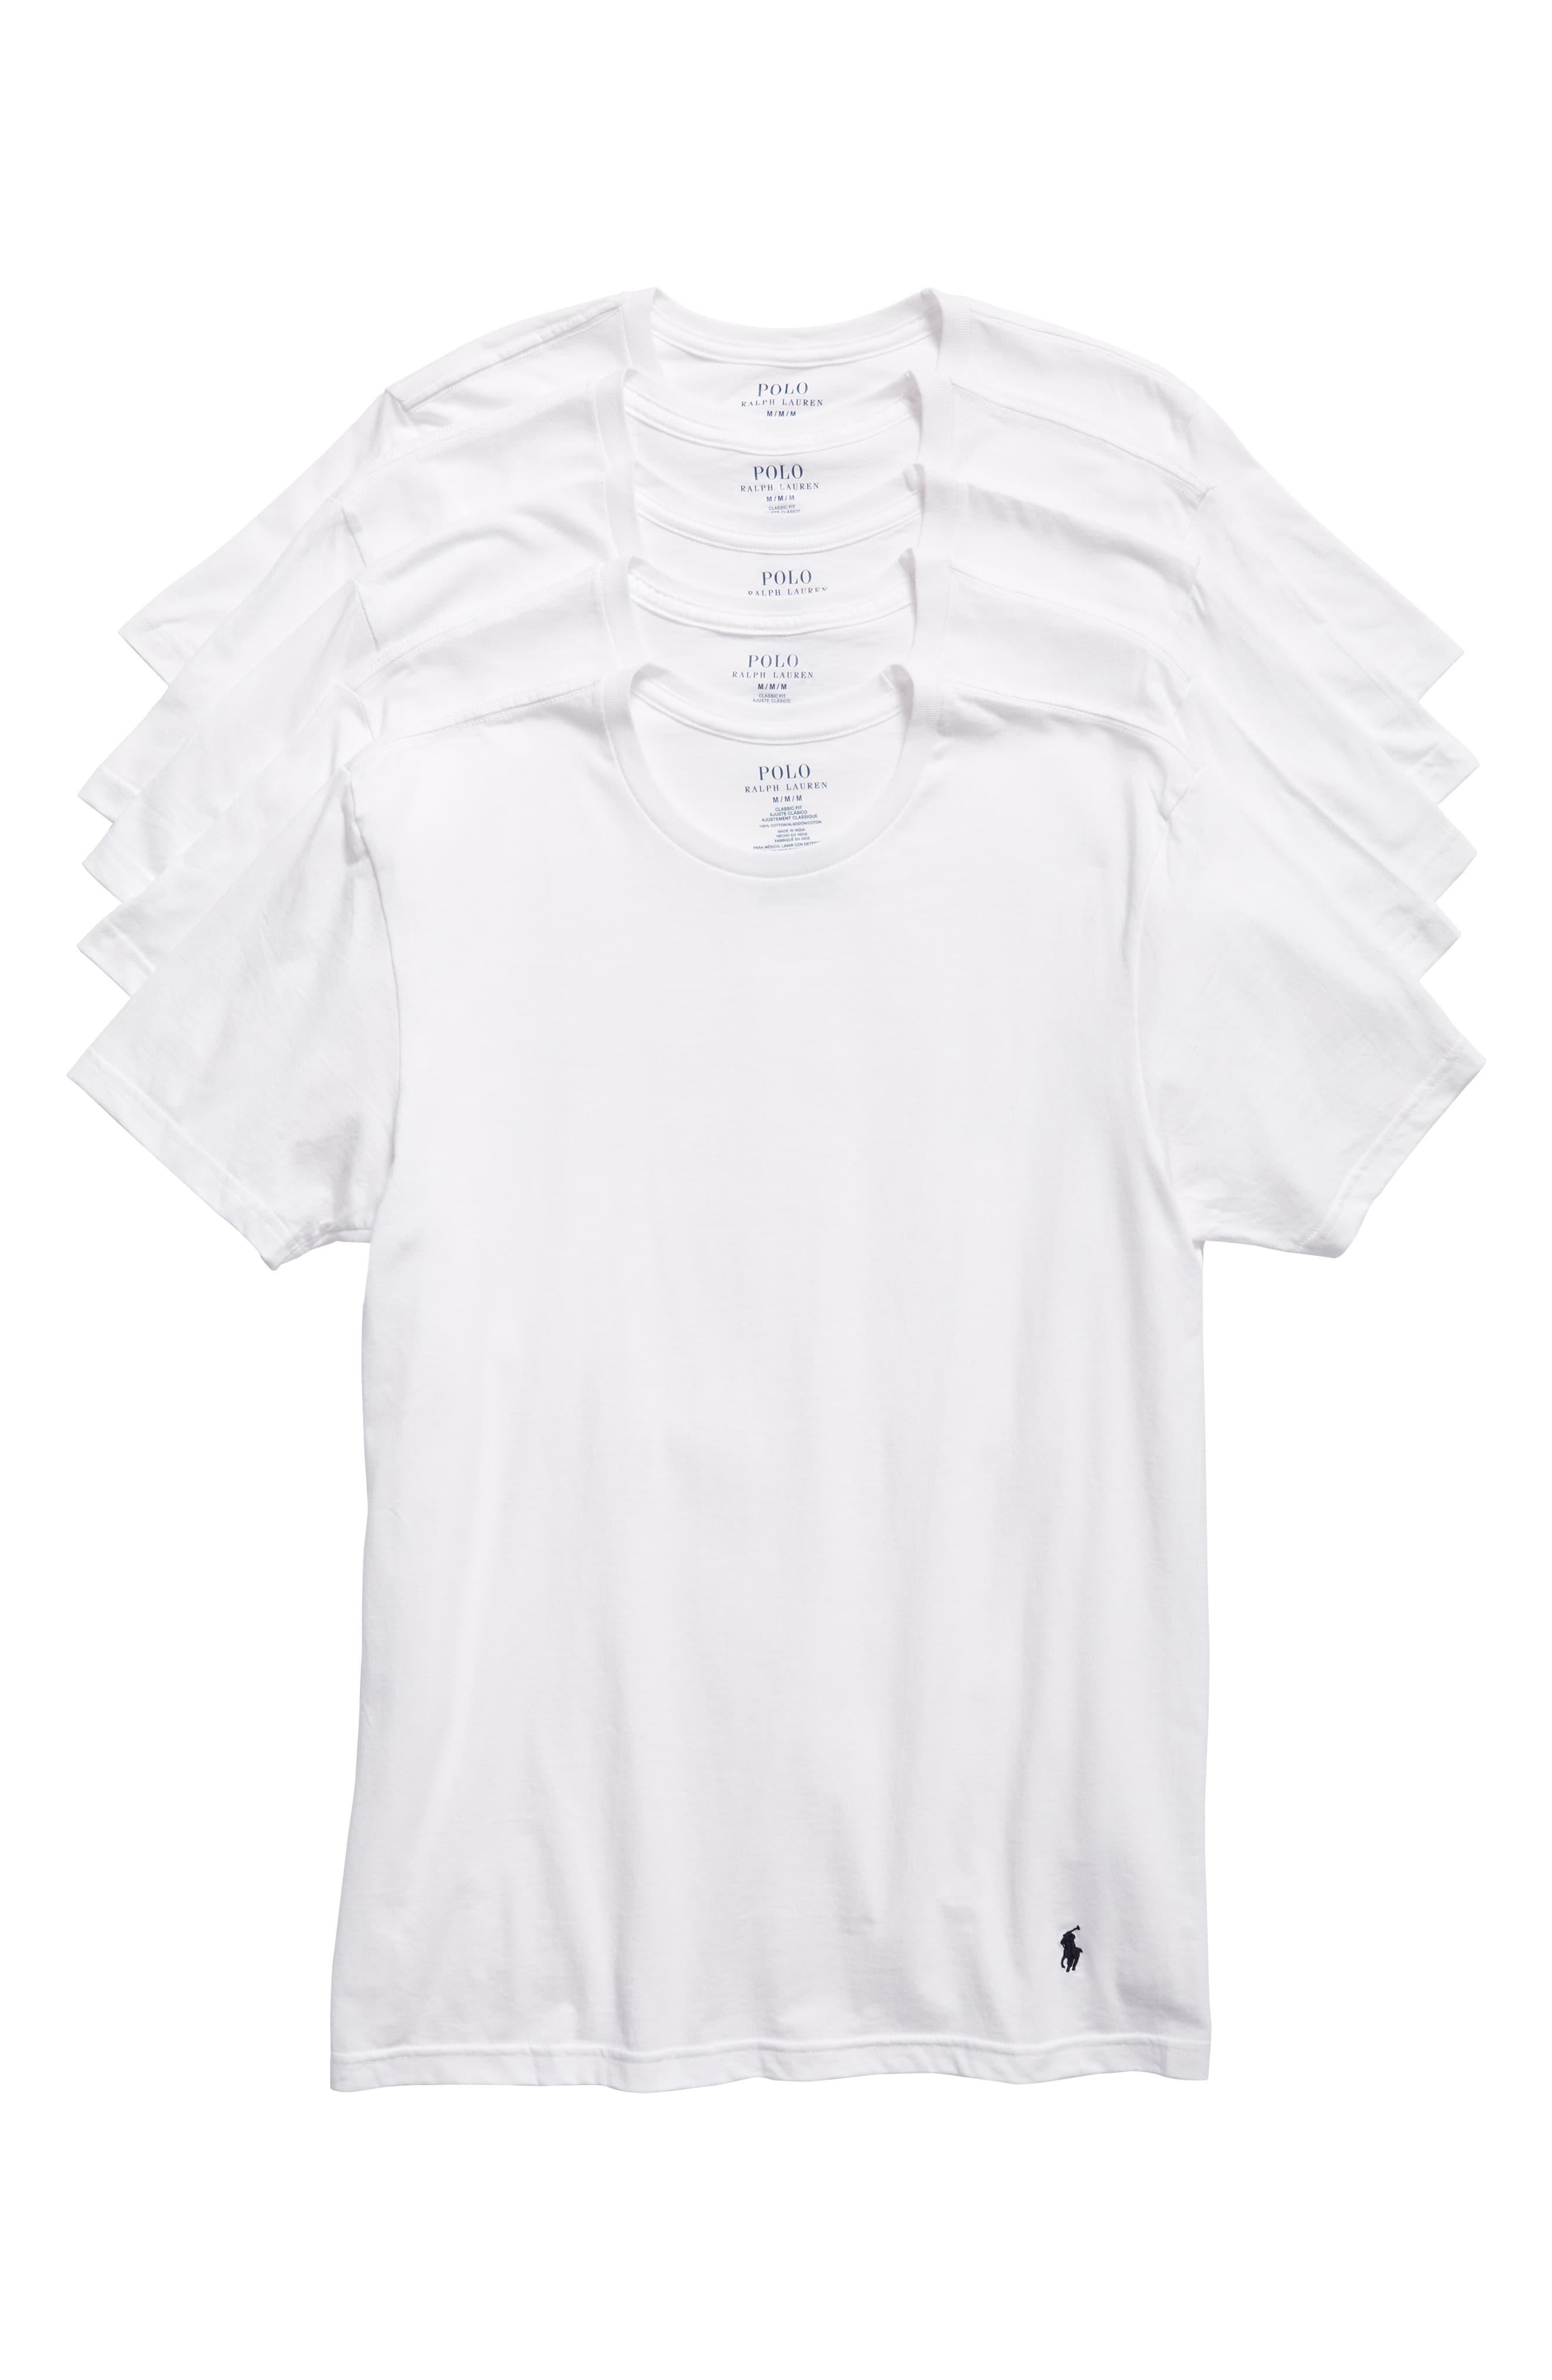 Polo Ralph Lauren Cotton 5-pack Crewneck T-shirts, White for Men - Save ...